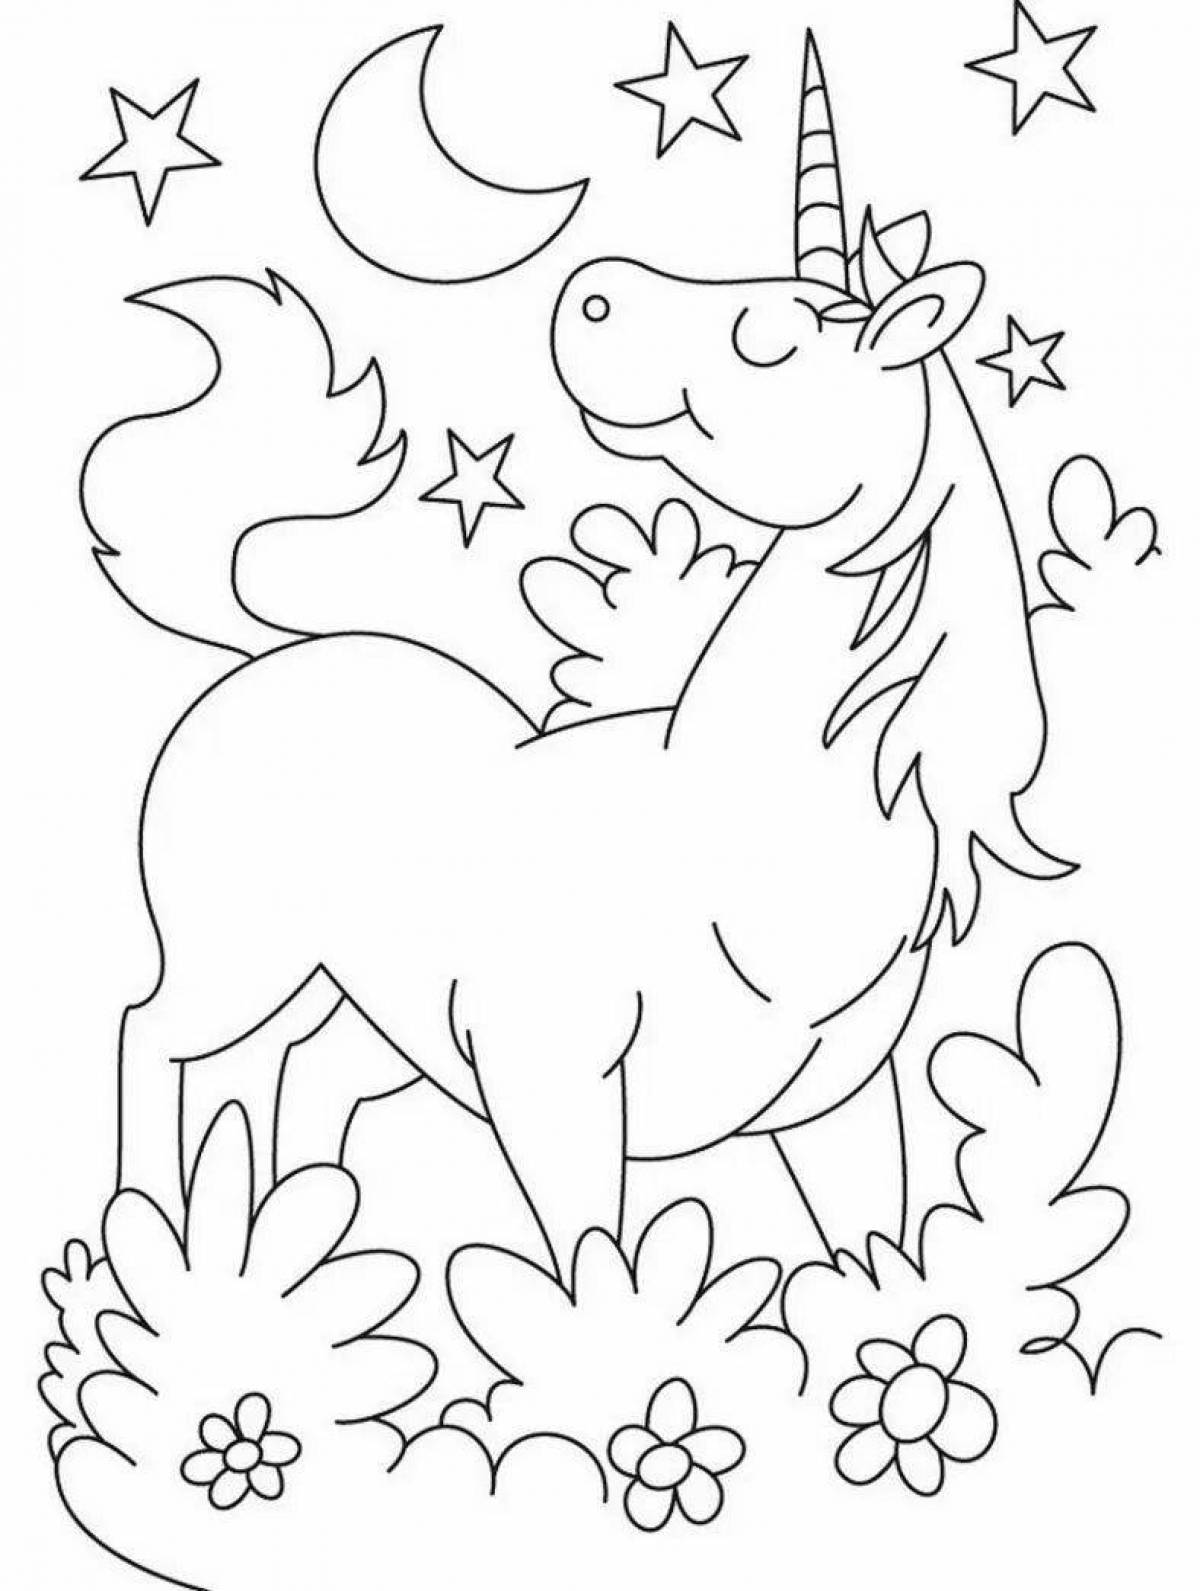 Unicorn fantasy coloring book for kids